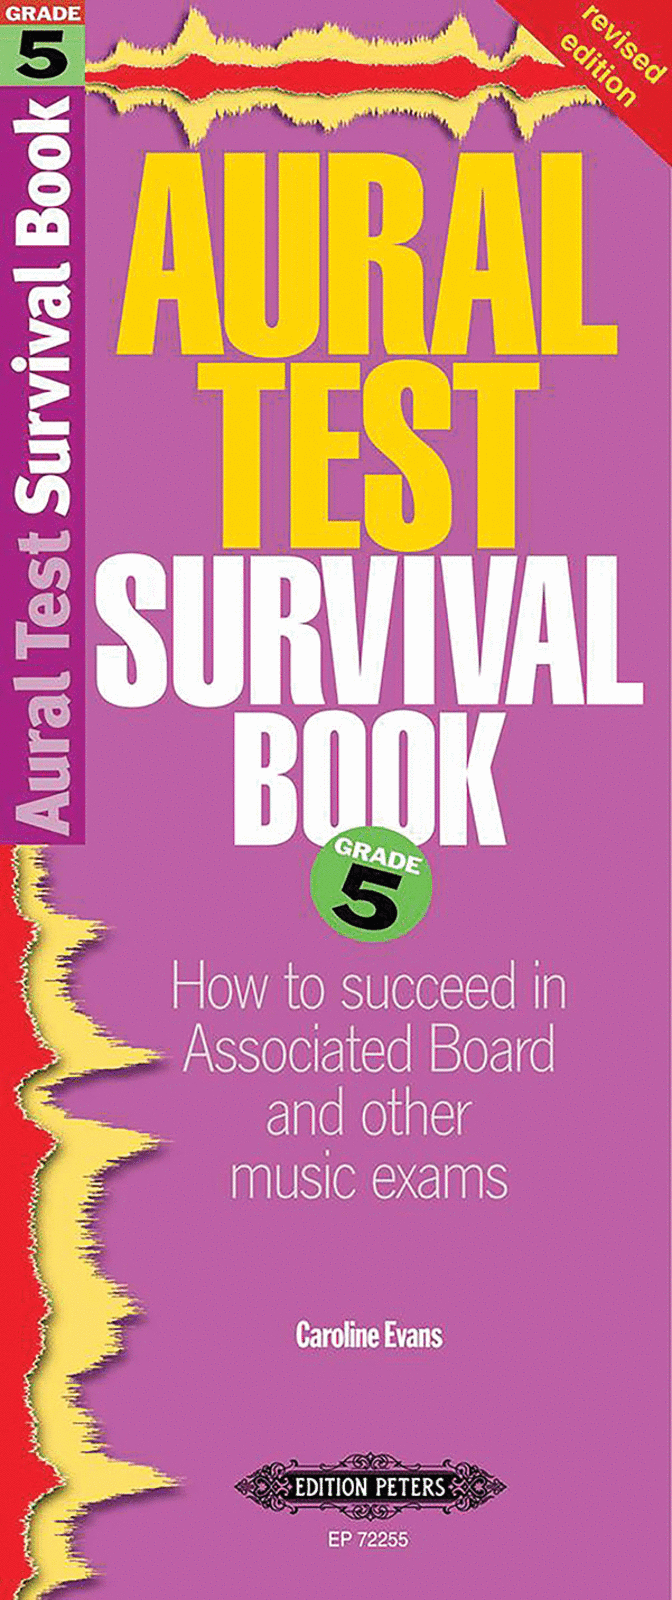 Aural Test Survival Book: Grade 5 (Revised Edition)